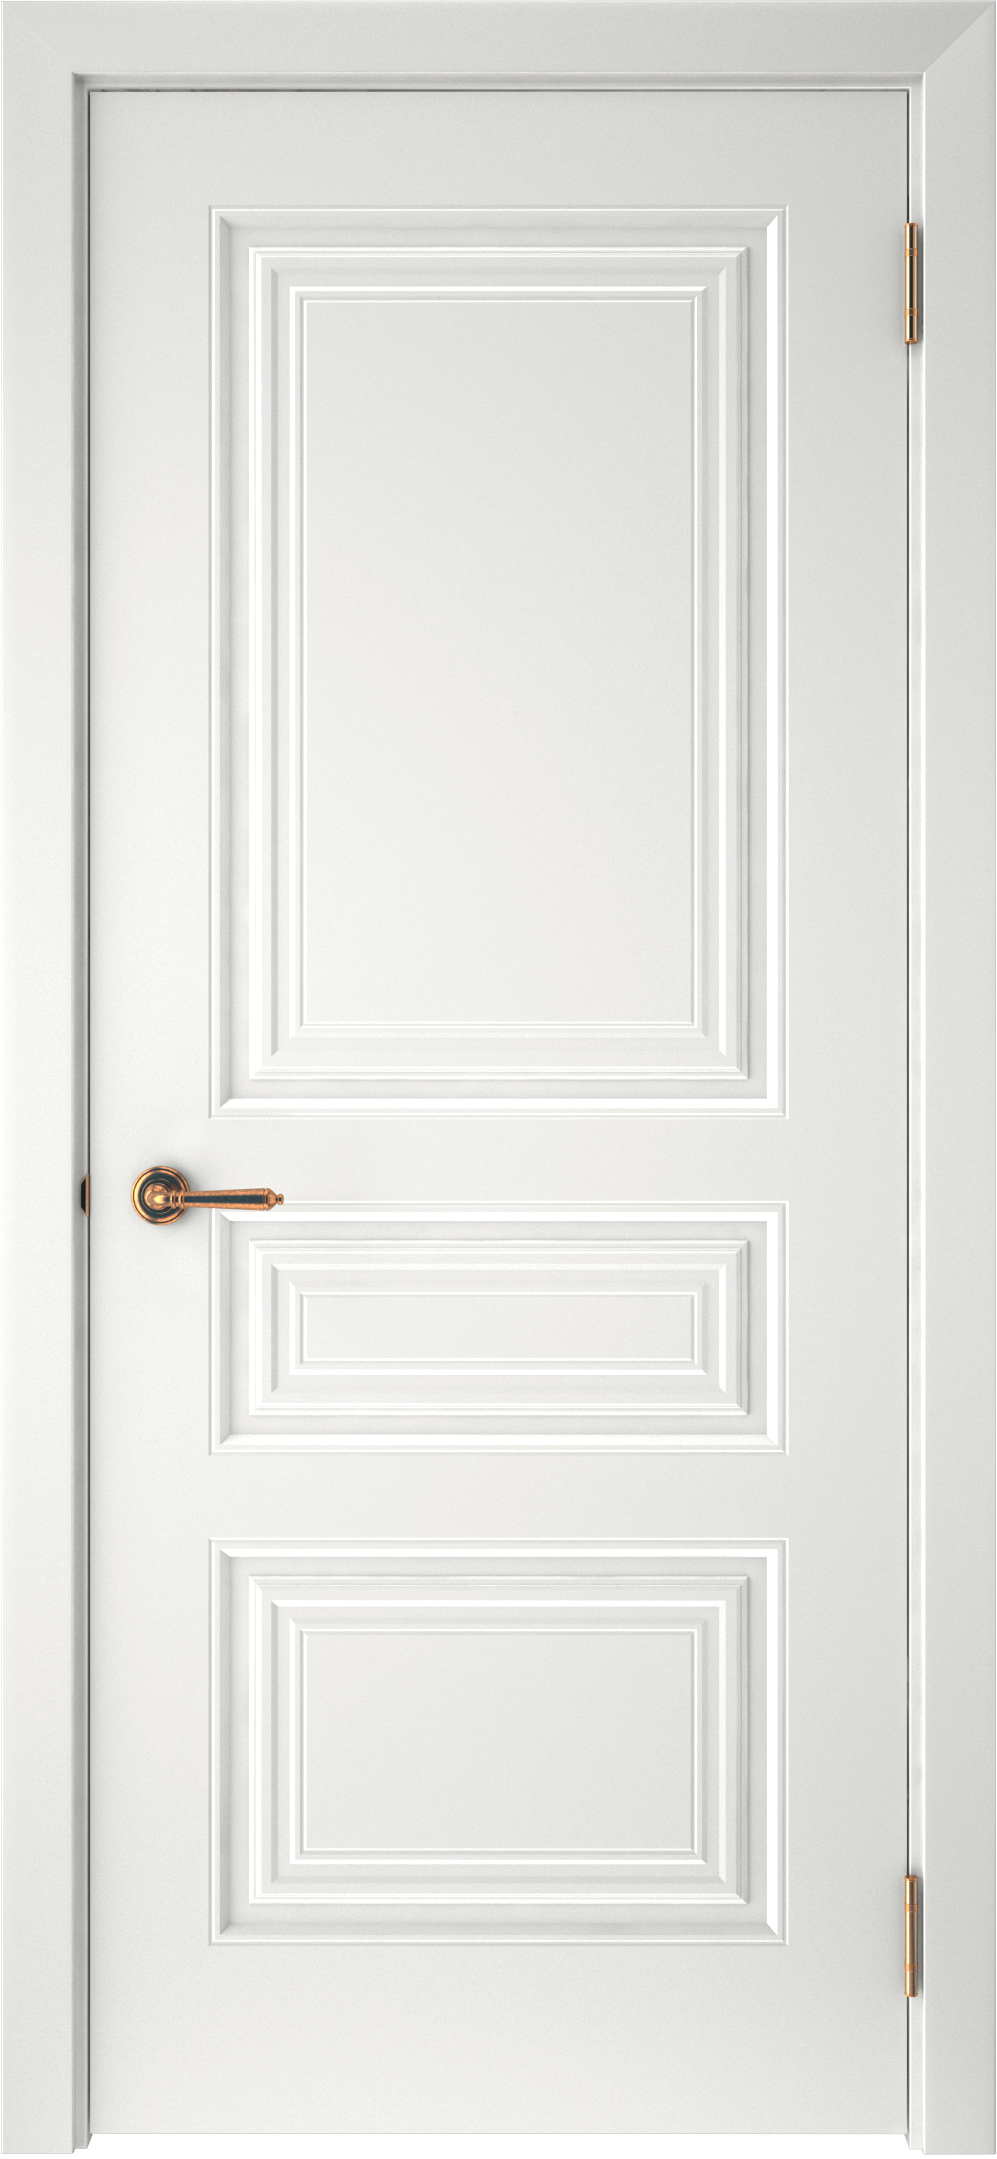 Двери крашеные (Эмаль) ТЕКОНА Смальта-44 глухое Белый ral размер 200 х 70 см. артикул F0000092483